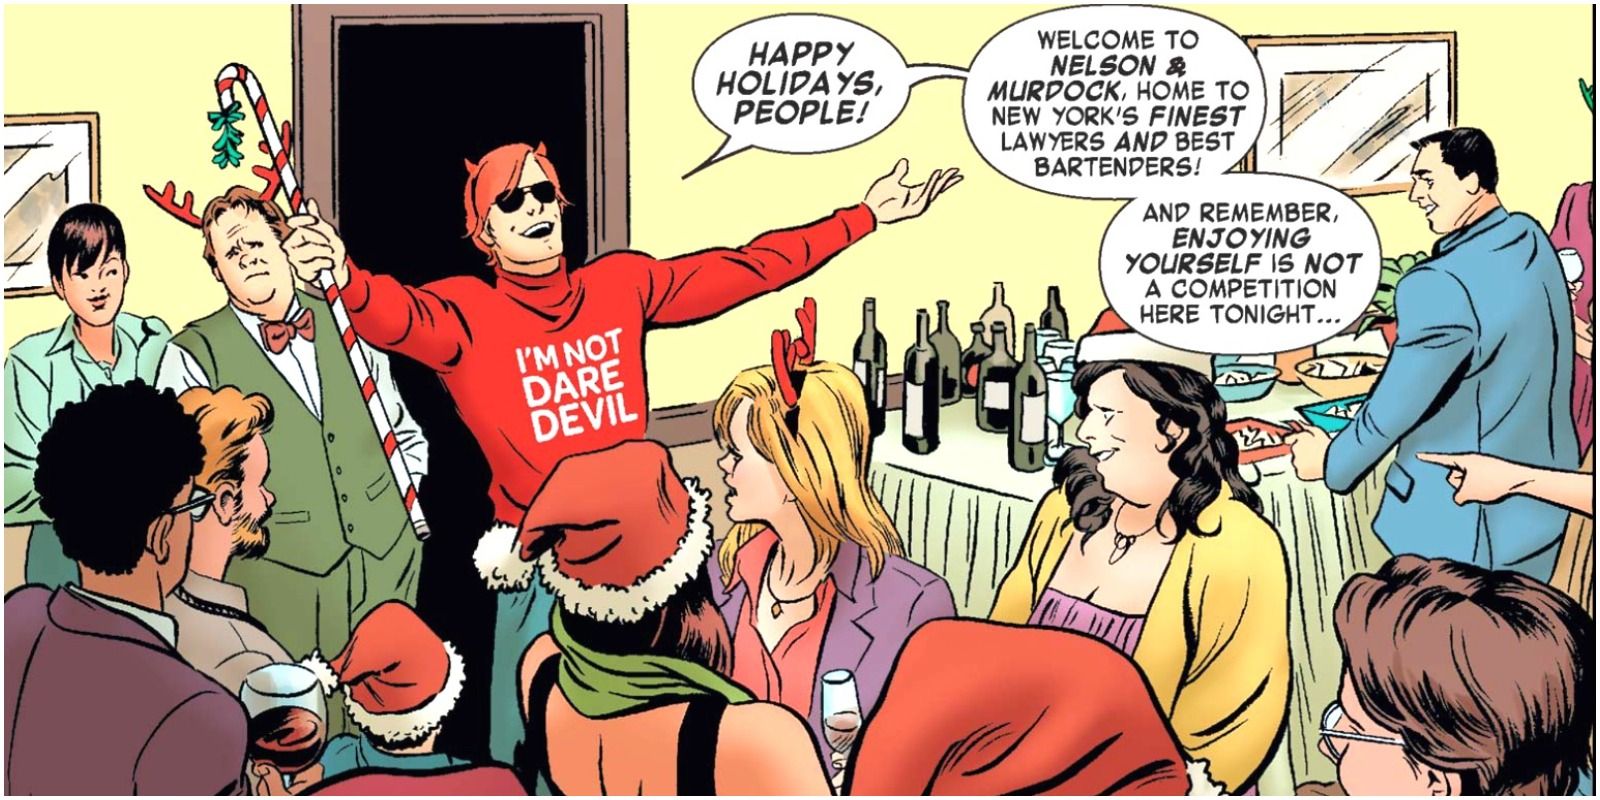 Matt Murdock pretending to be Daredevil at Christmas Party from Marvel Comics